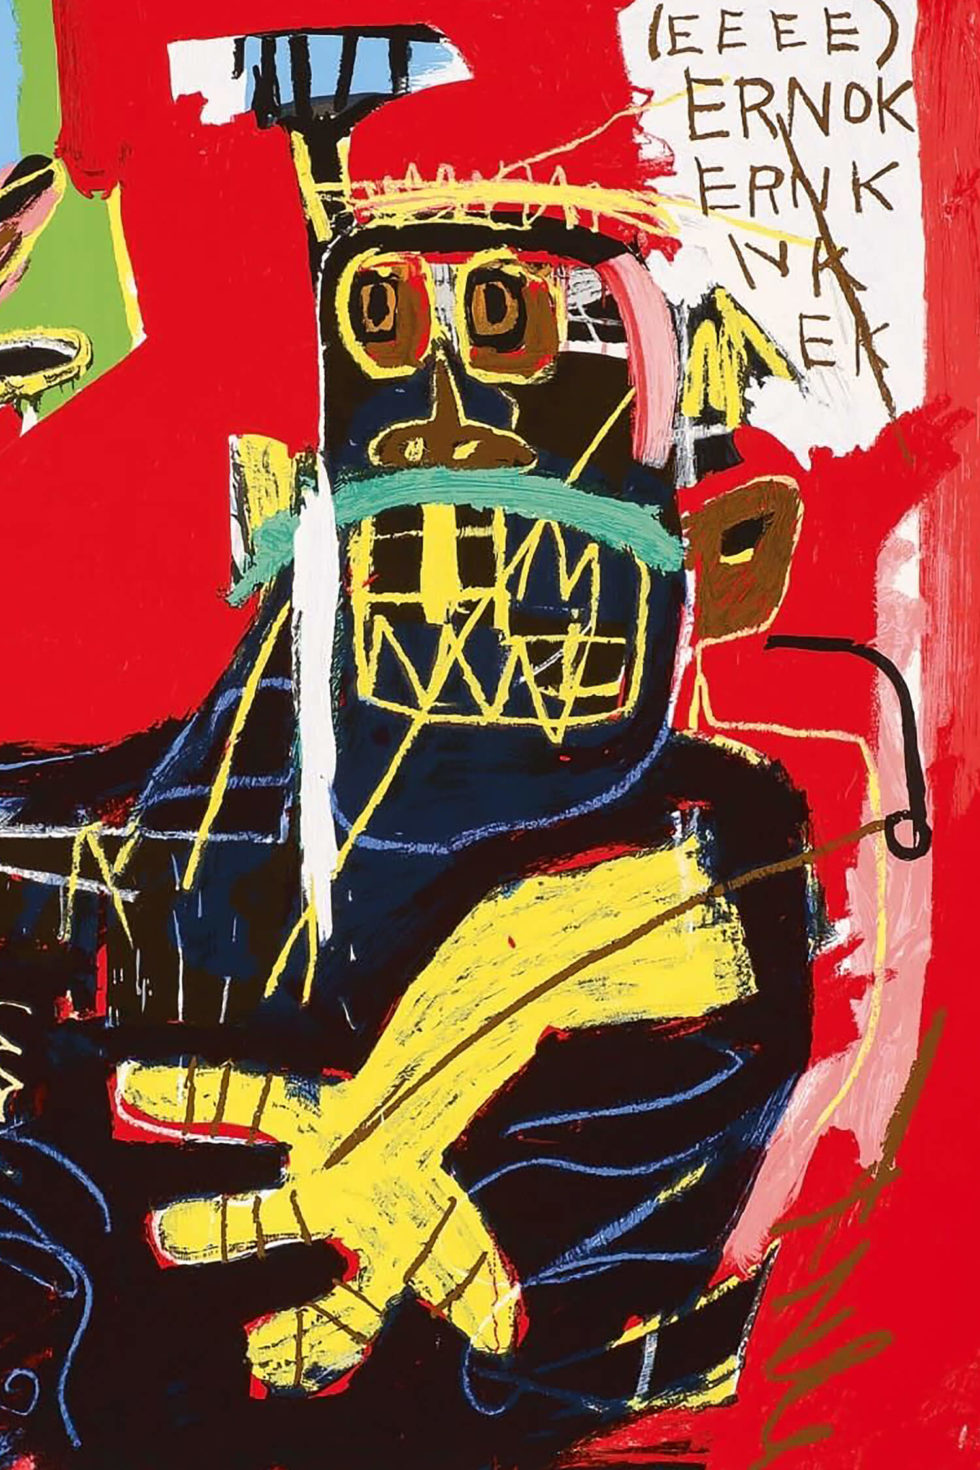 Jean-Michel Basquiat | Ernok - The Whisper Gallery